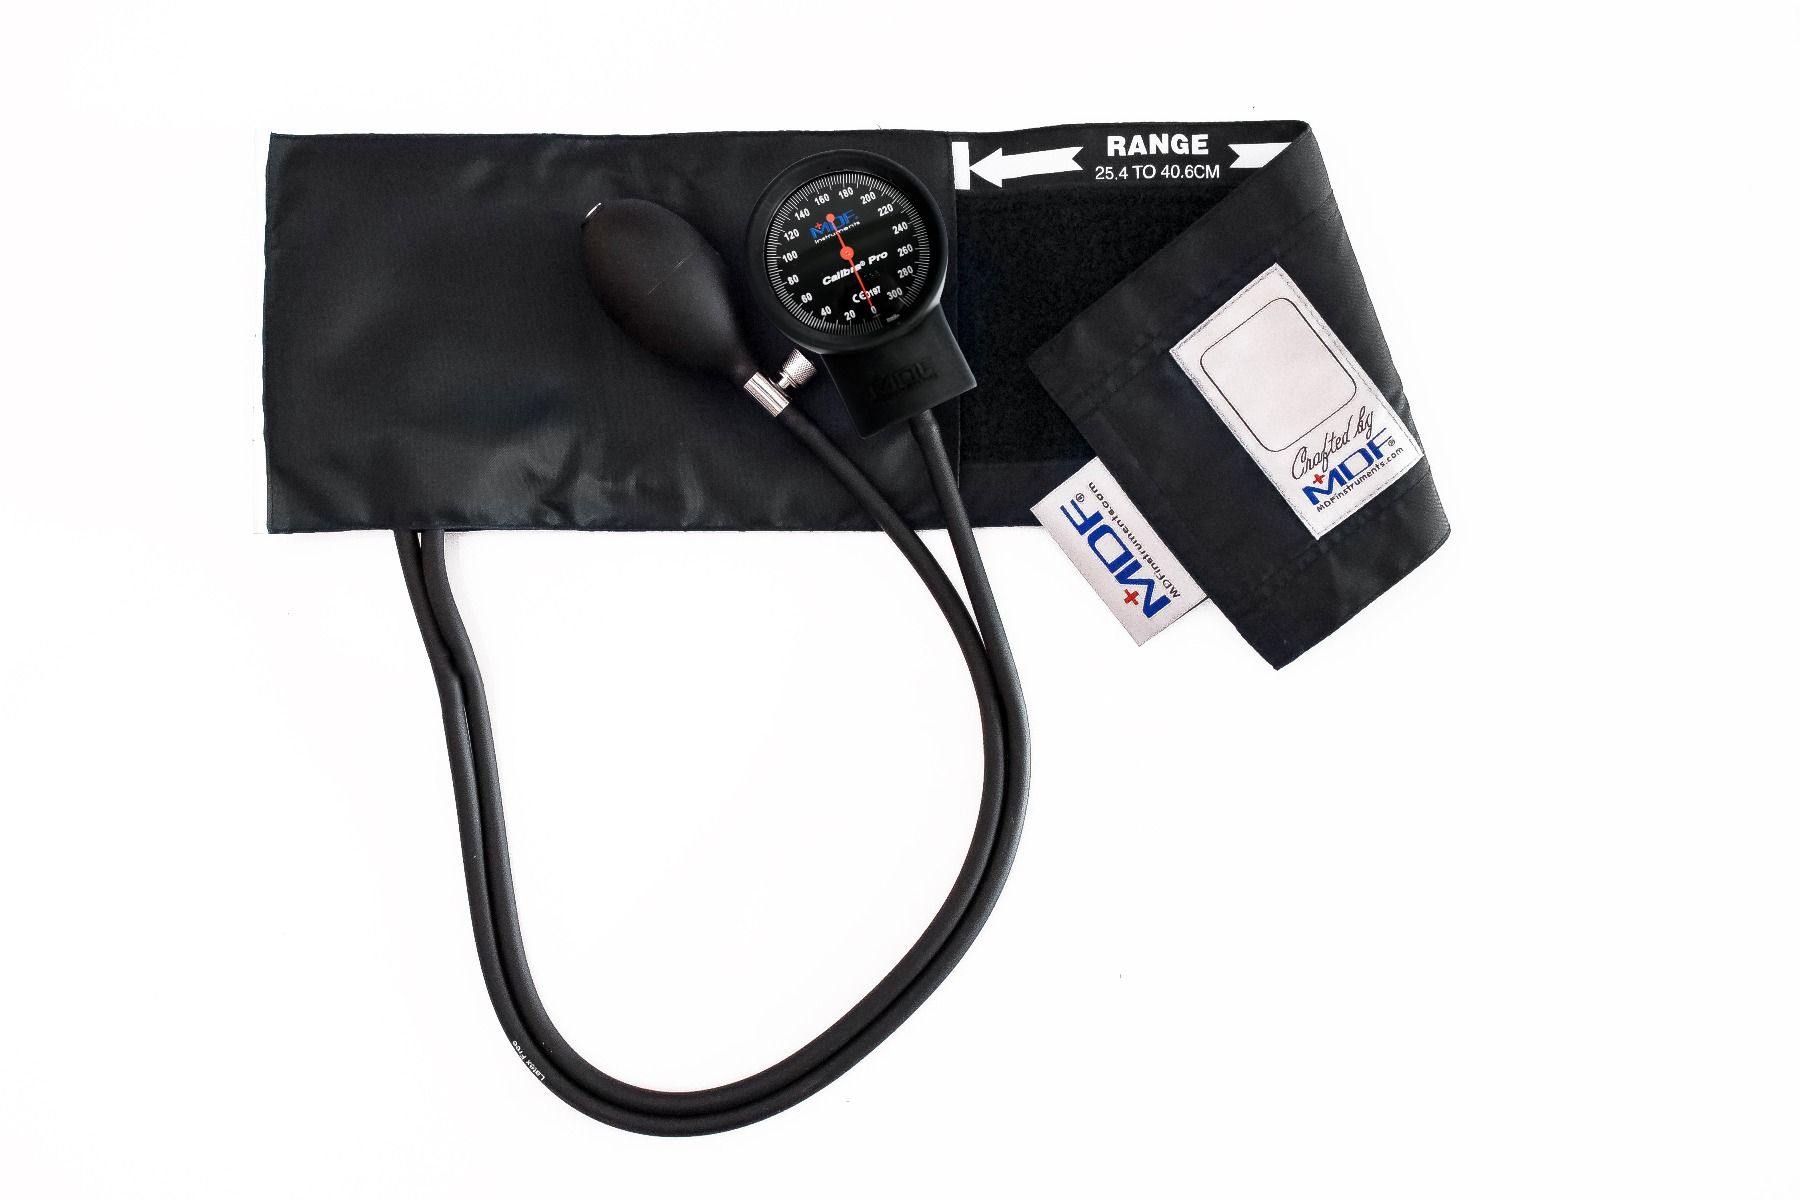 MDF® Calibra® Pro Aneroid Blutdruckmessgerät Doppelschlauch - BlackOut